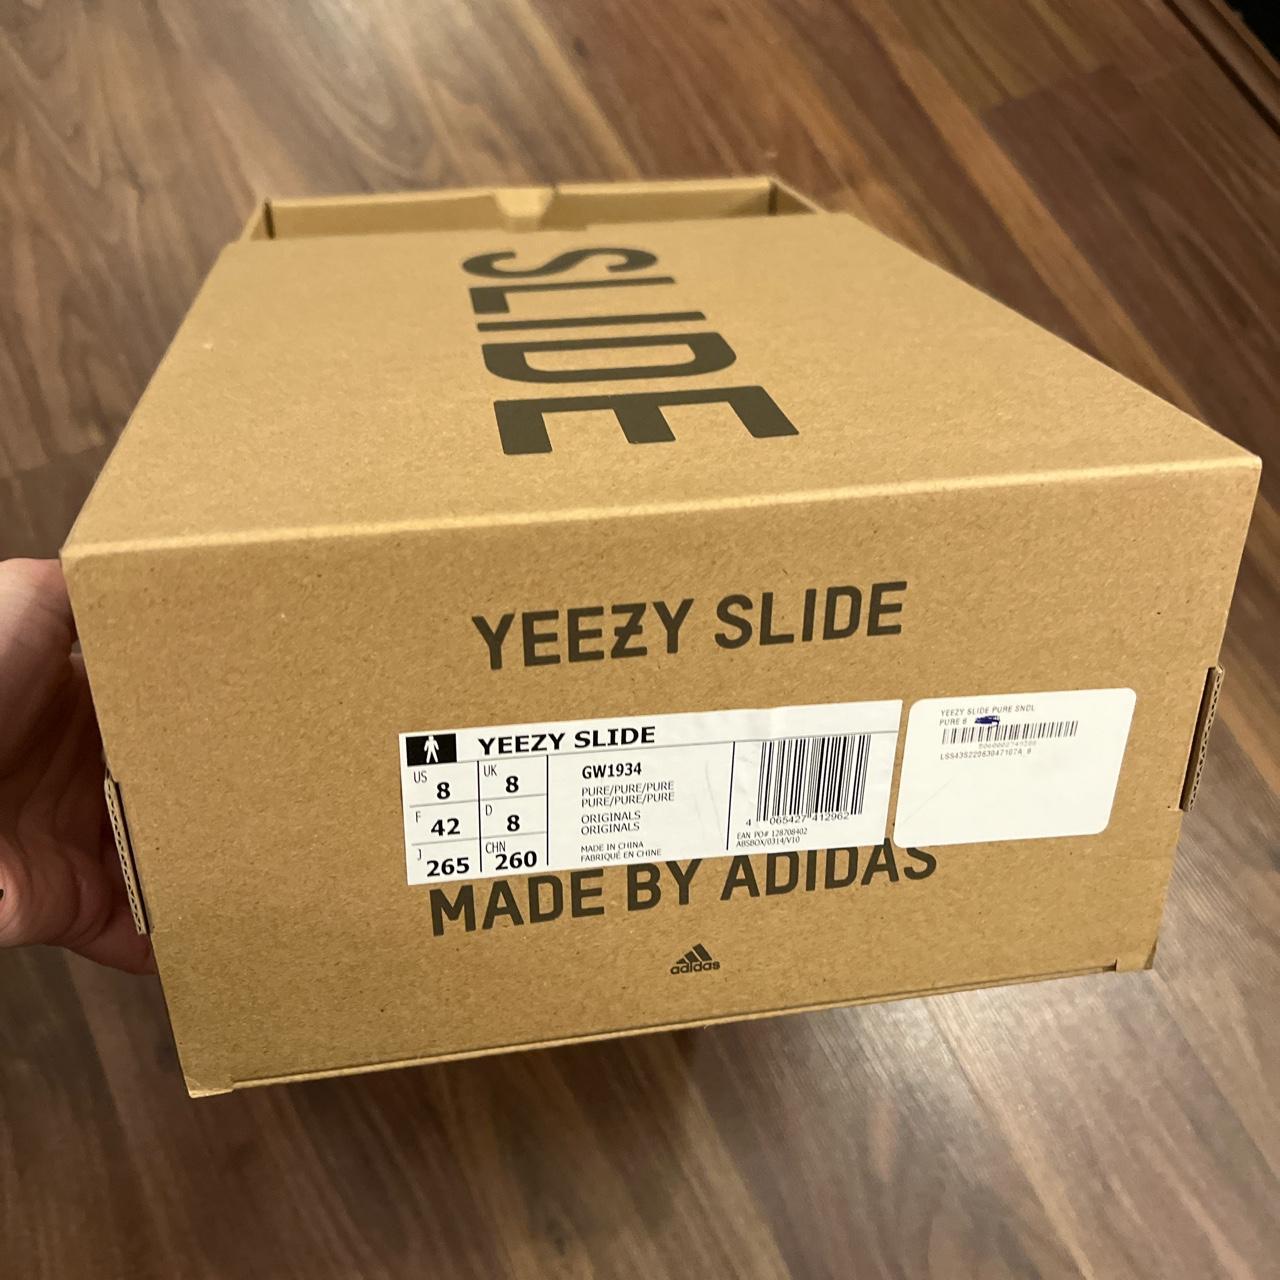 Yeezy Slide box brand new - Depop